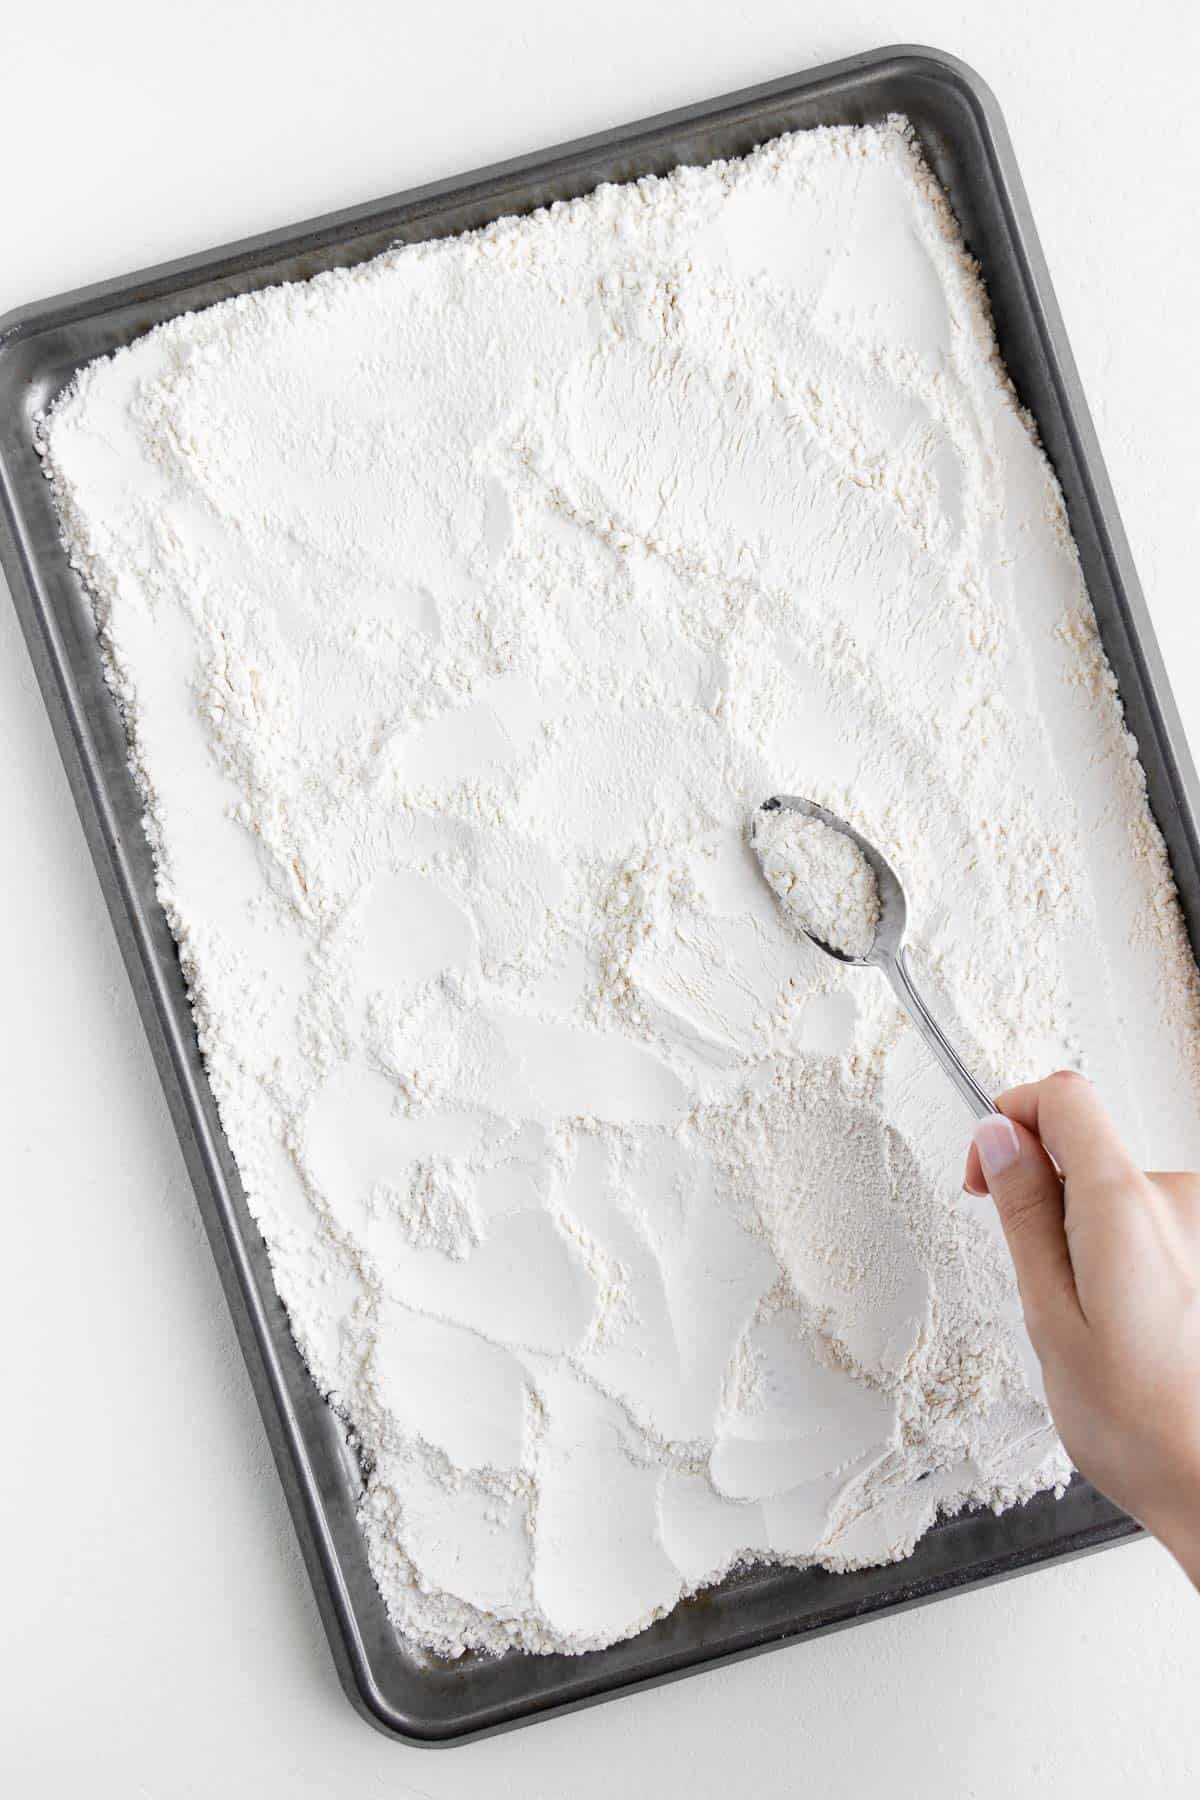 a hand spreading all-purpose flour onto a metal baking sheet